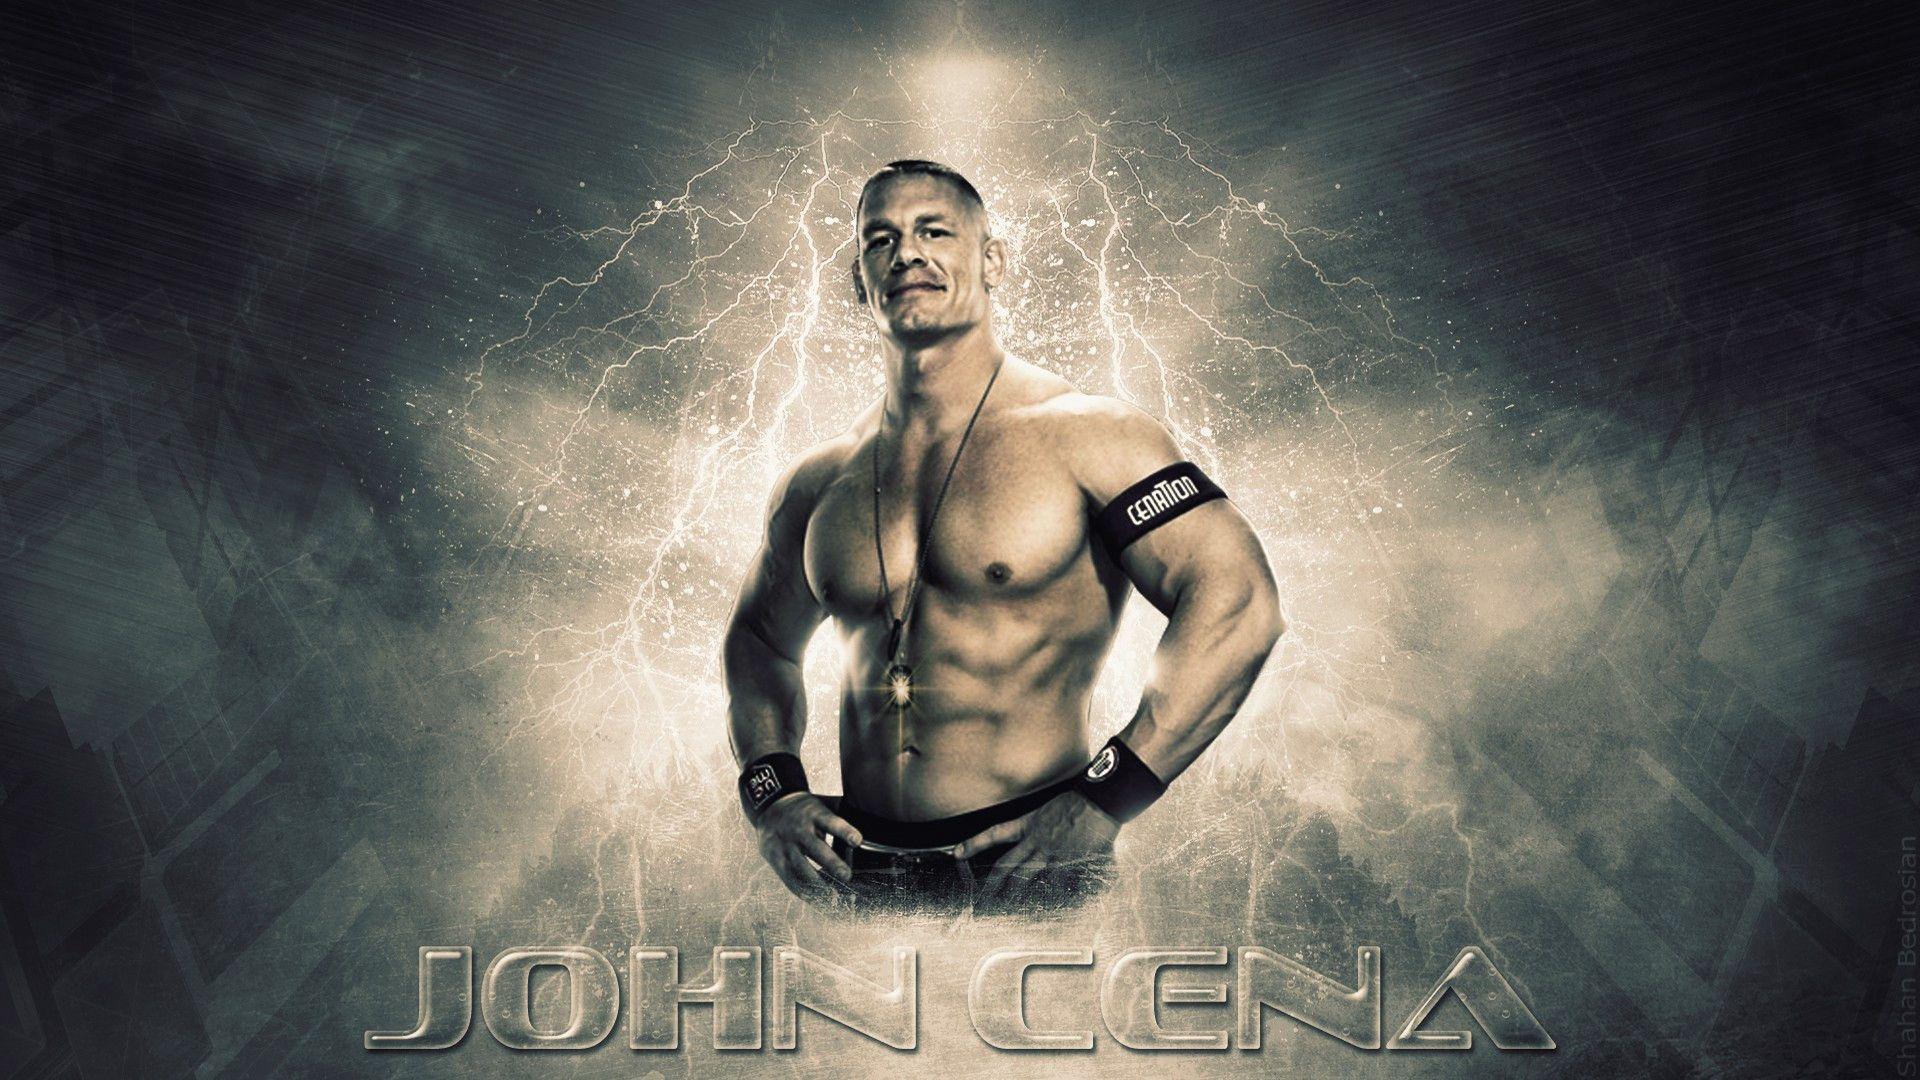 John Cena WWE HD Wallpaper